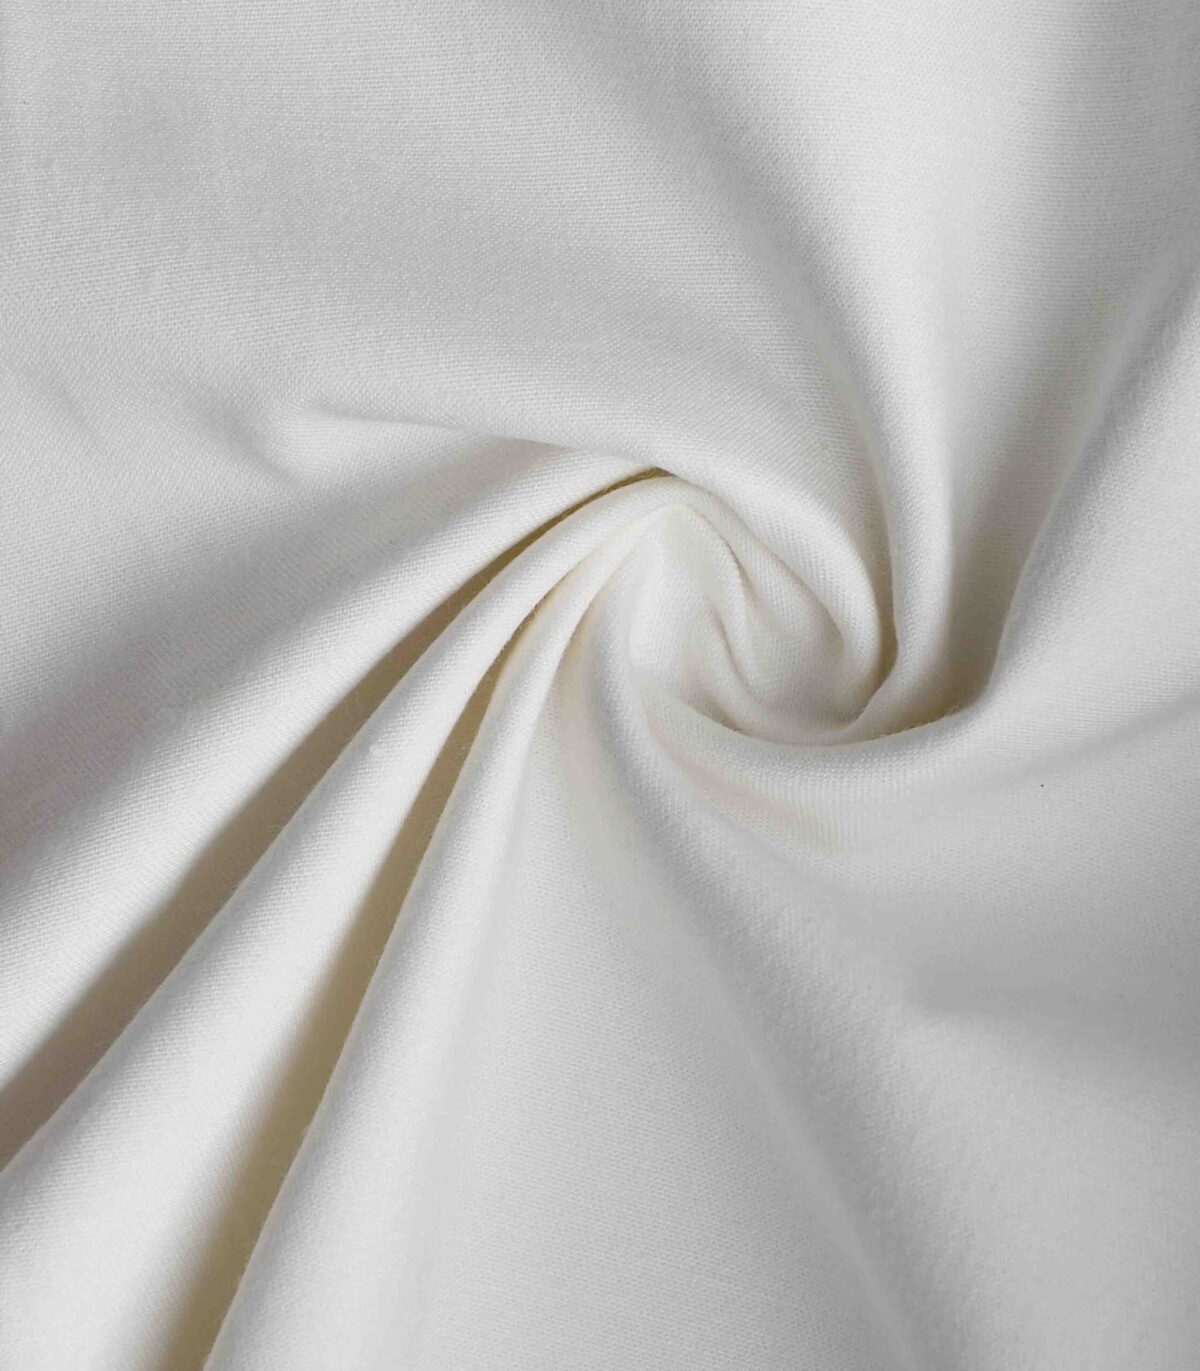 Cotton Lyocell Spandex RFD Fabric